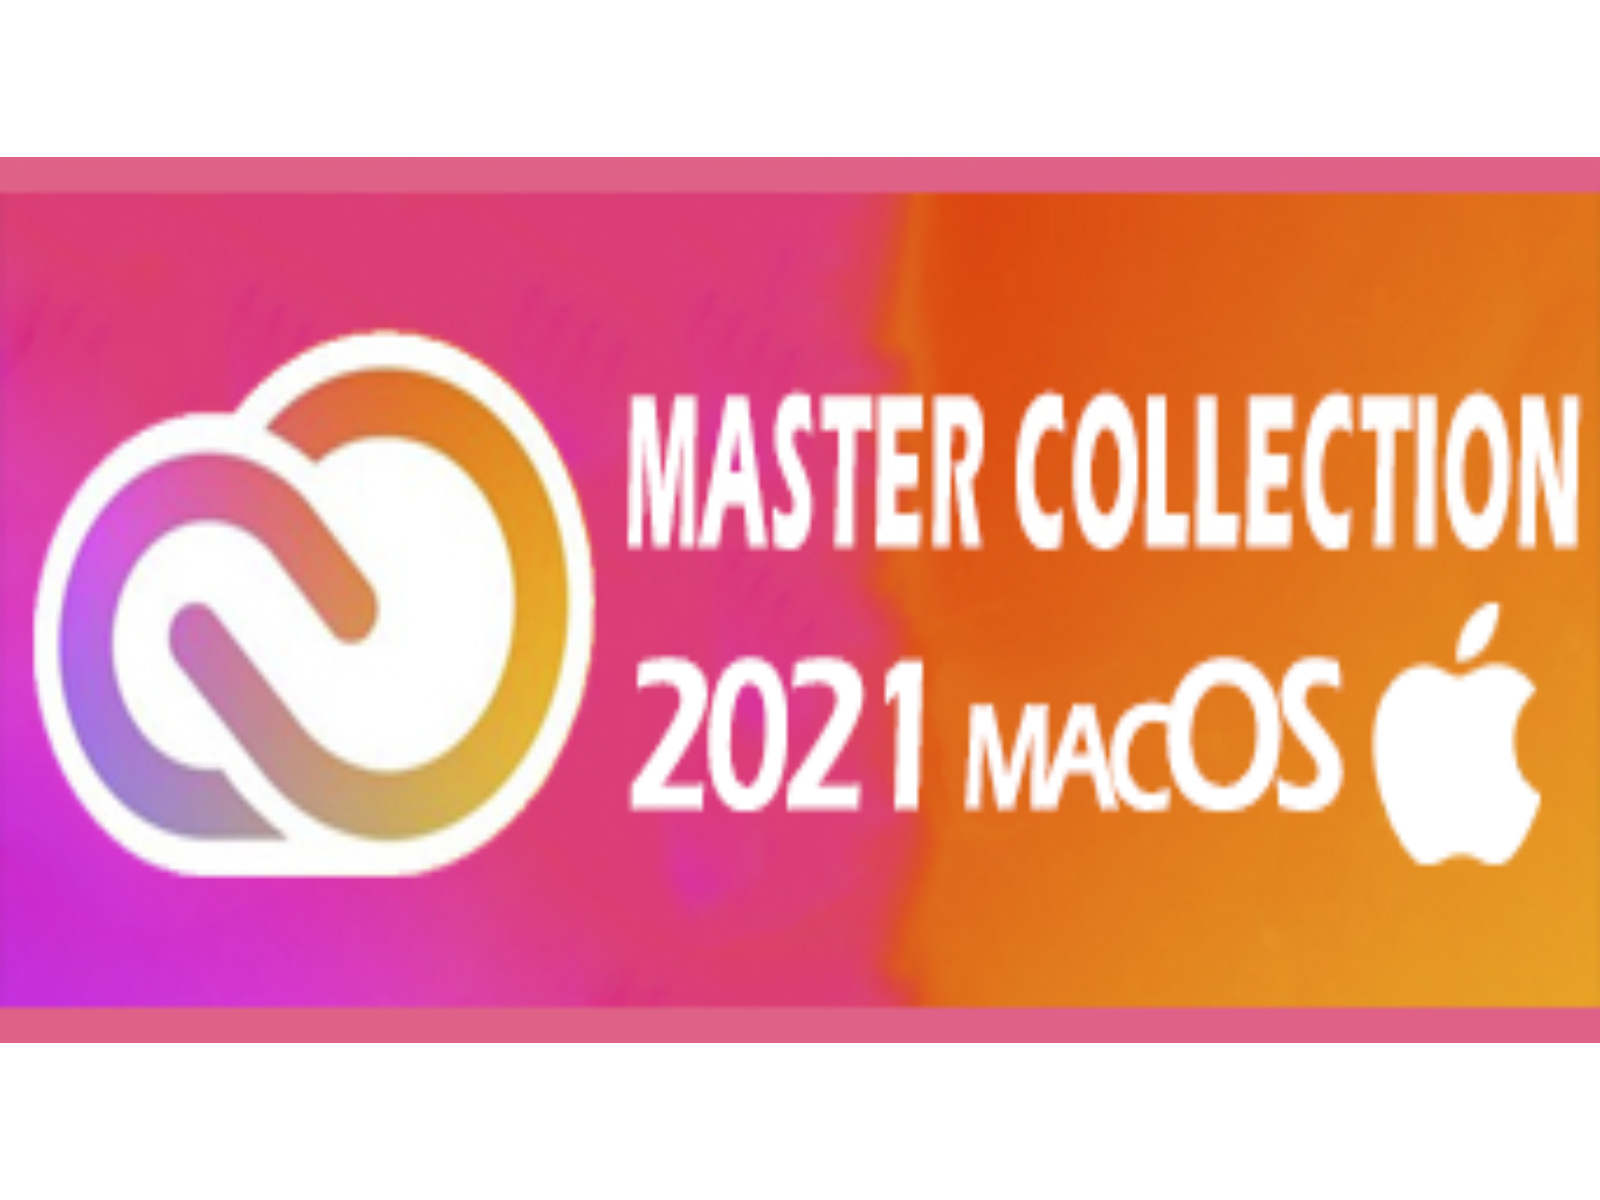 M‌a‌s‌t‌er‌ Collection ‌2‌0‌2‌1 macOS - Lifetime